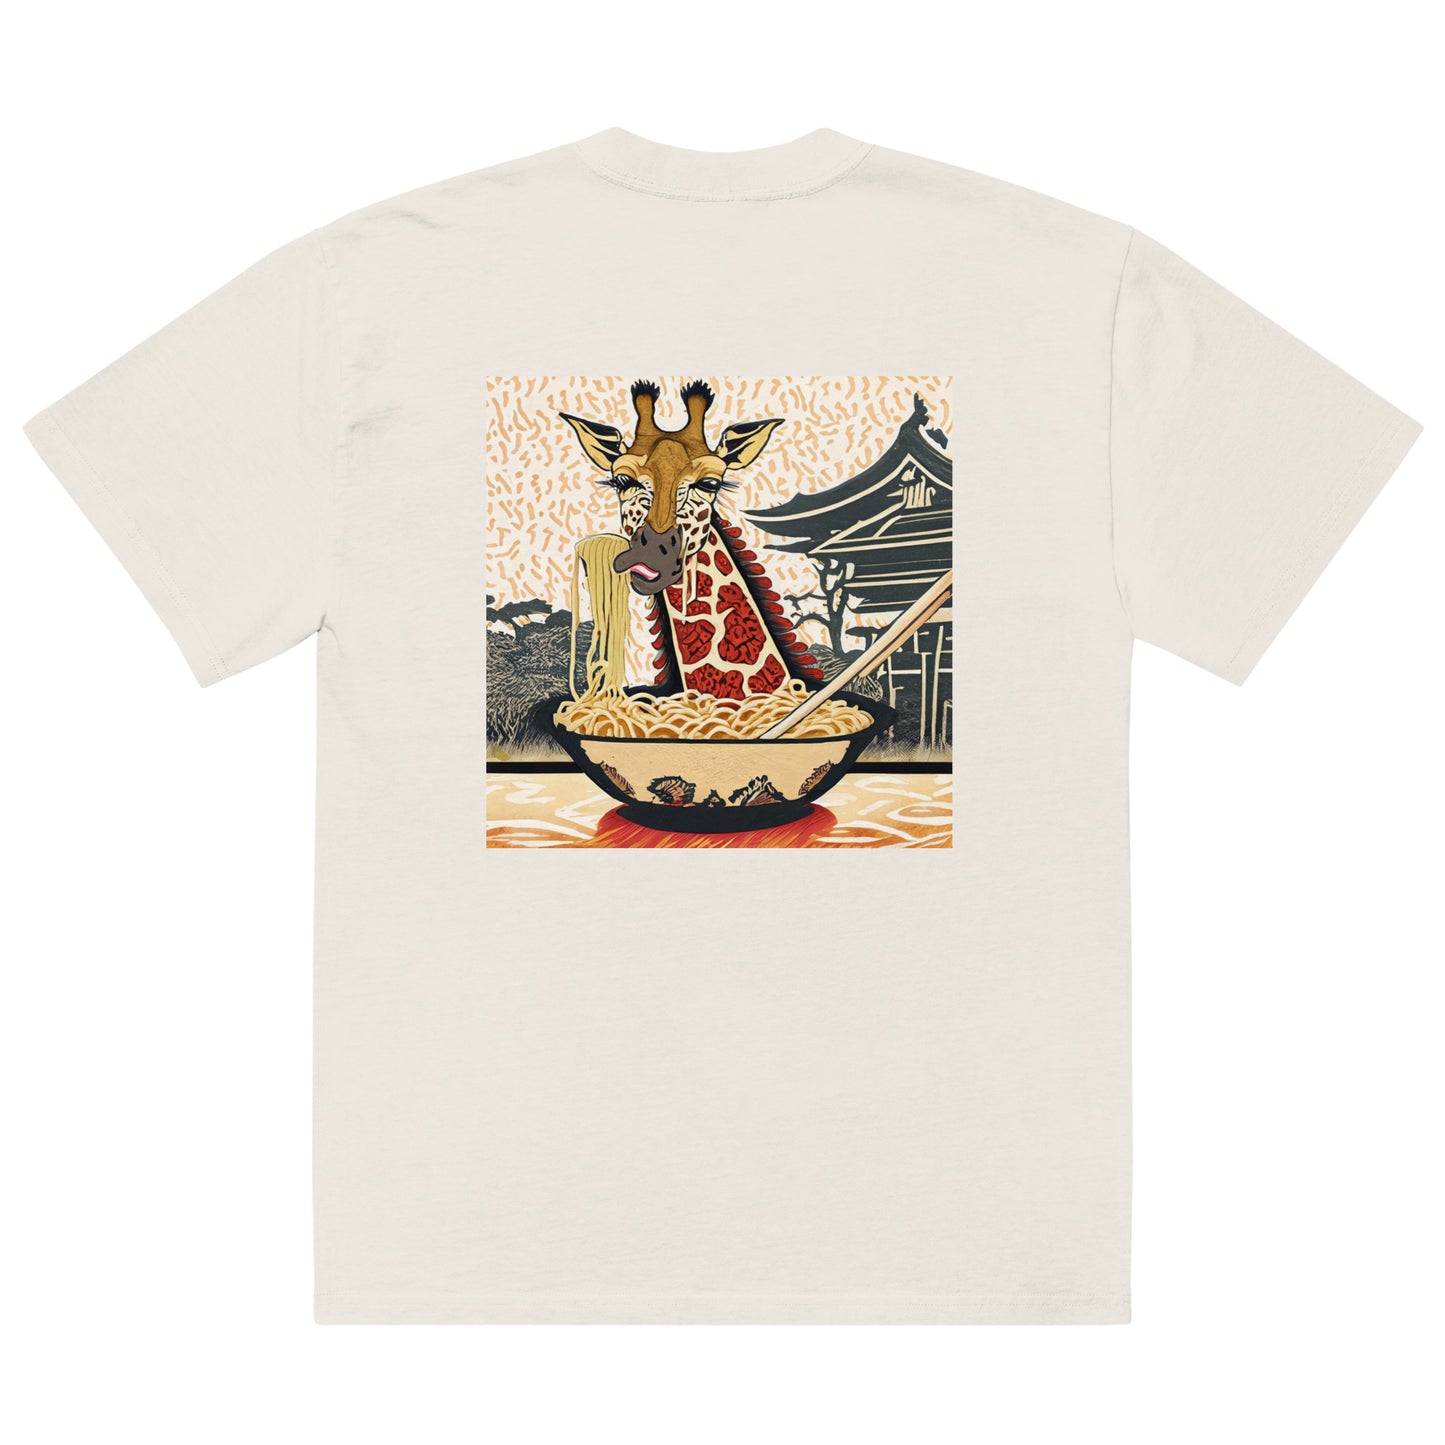 Giraffe Love Ramen (Woodblock Printing Style) Oversized Faded T-shirt by tokyozoodesign